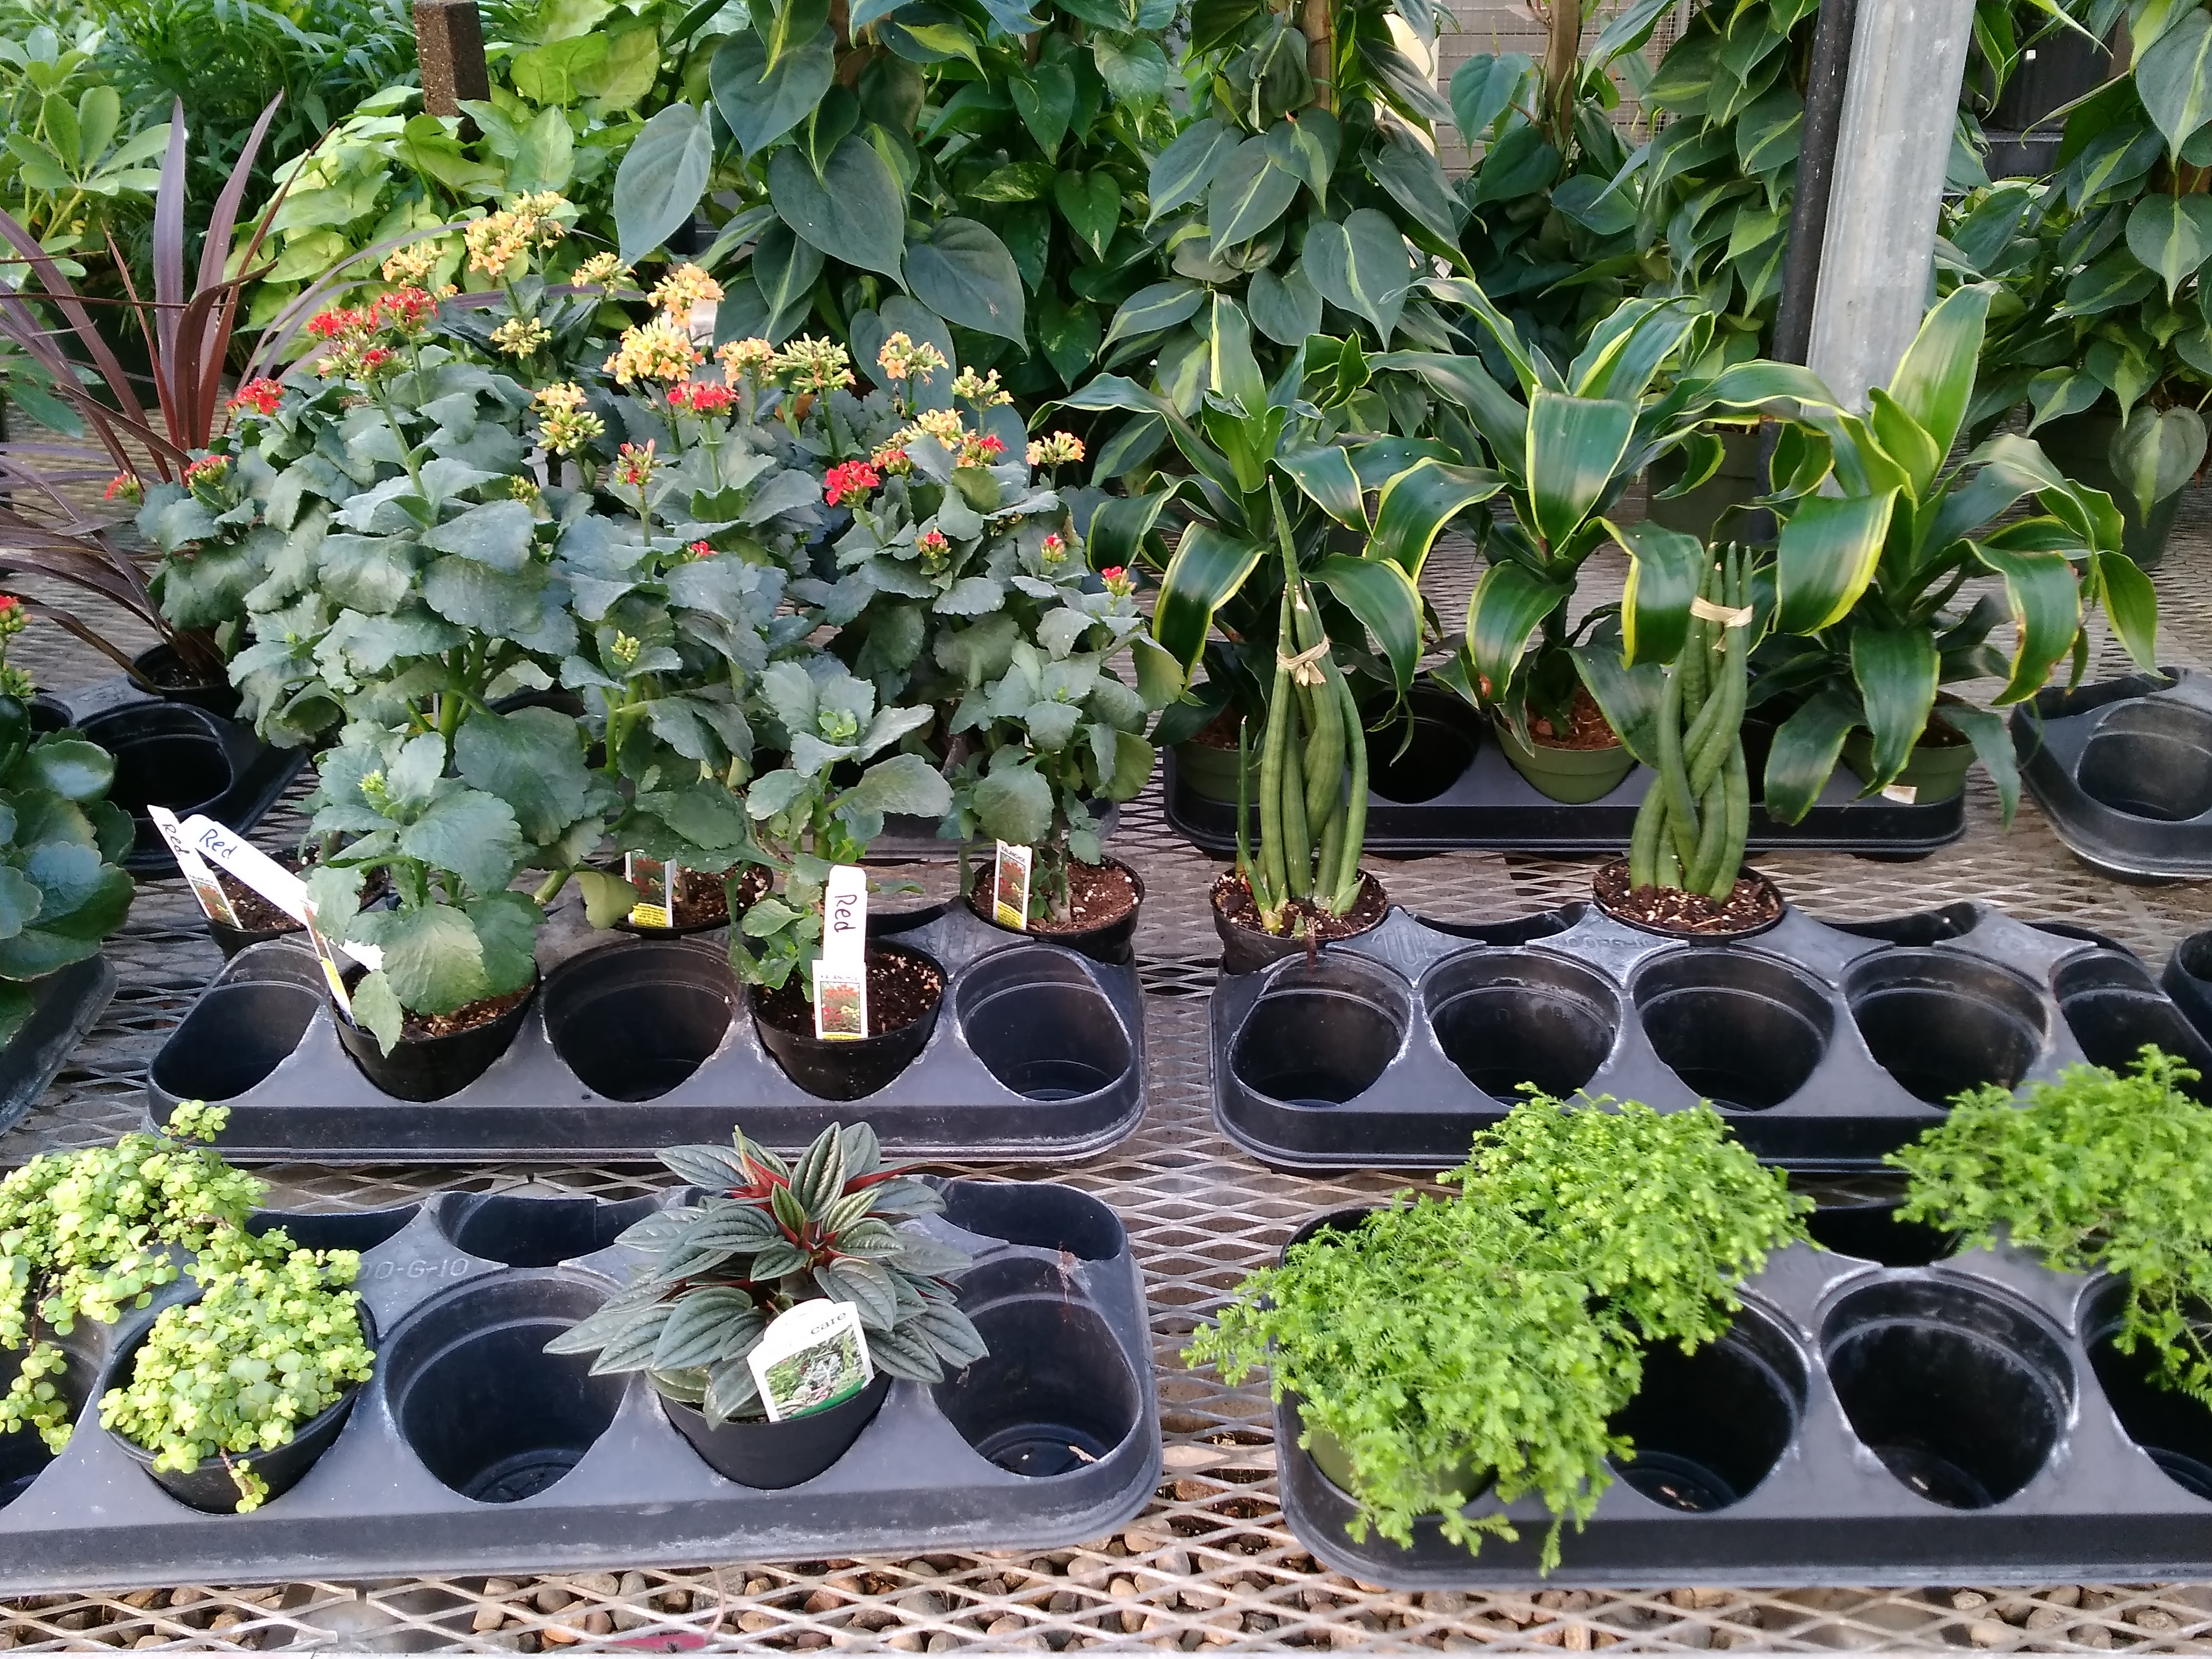 Lowes garden center hanging plants